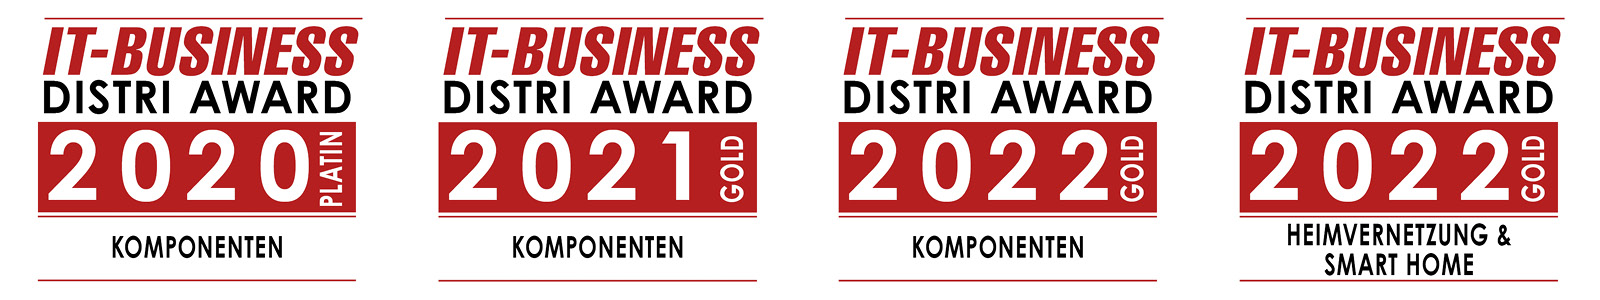 ITB-Awards_4er